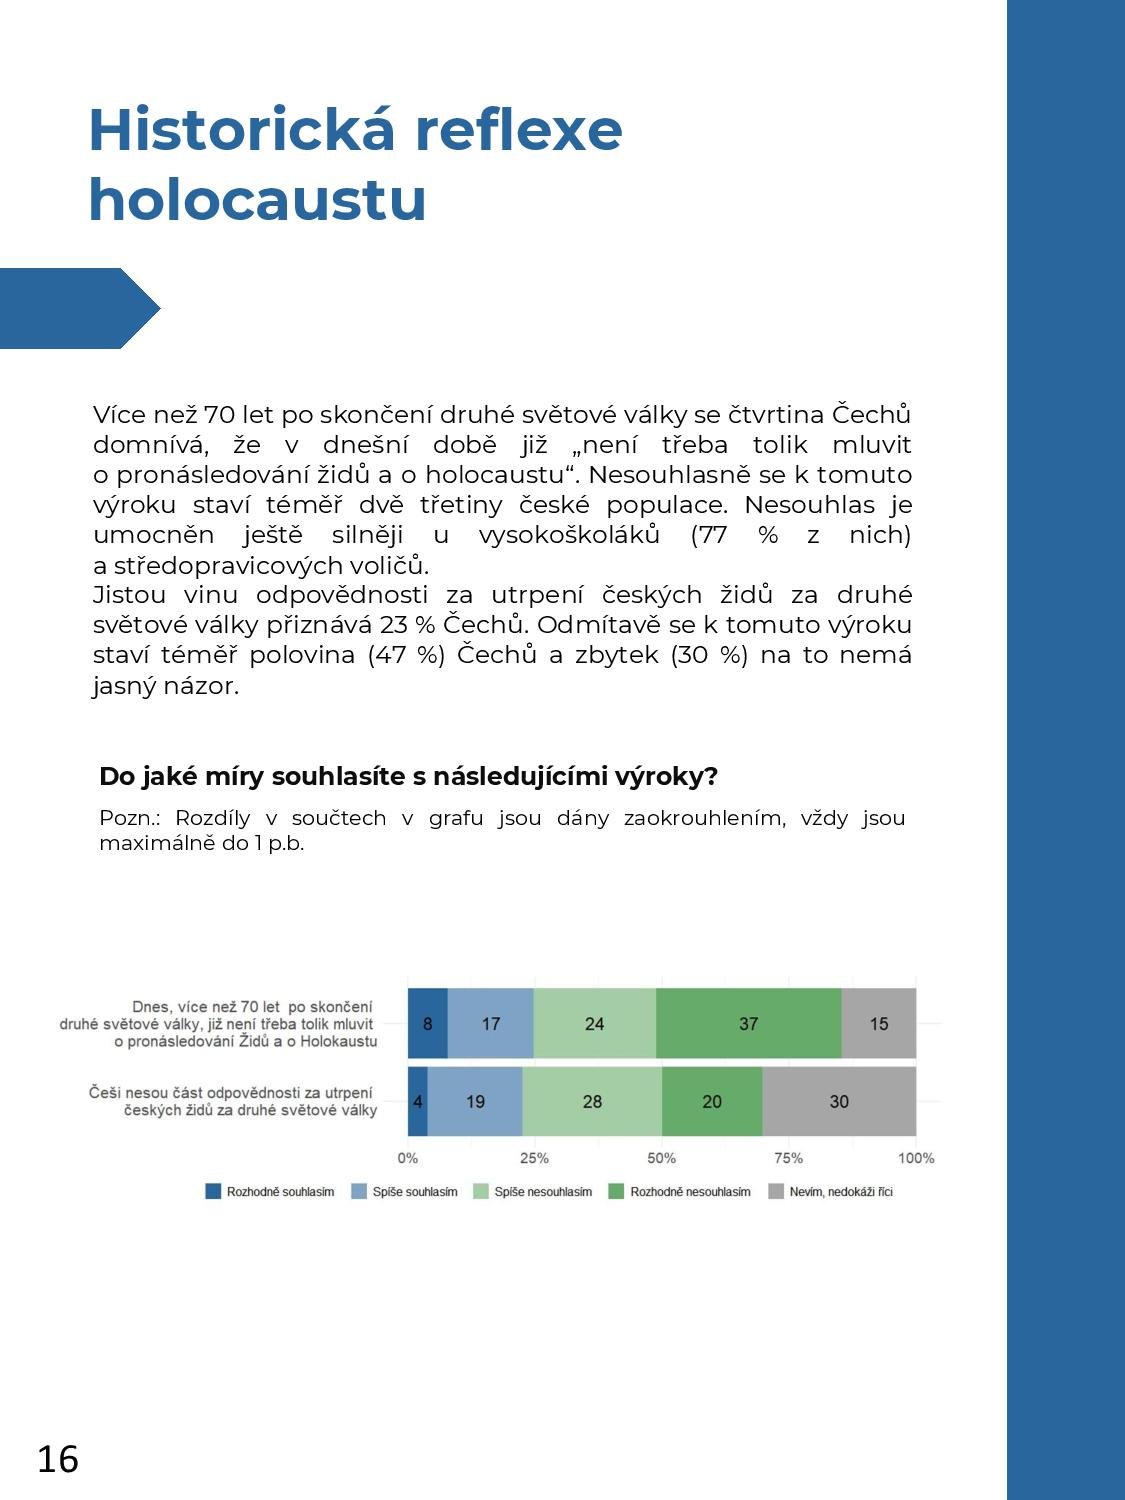 HCIS_PRCP_Public attitudes towards Israel_REPORT_CZ_Finální (2)-page-016.jpg